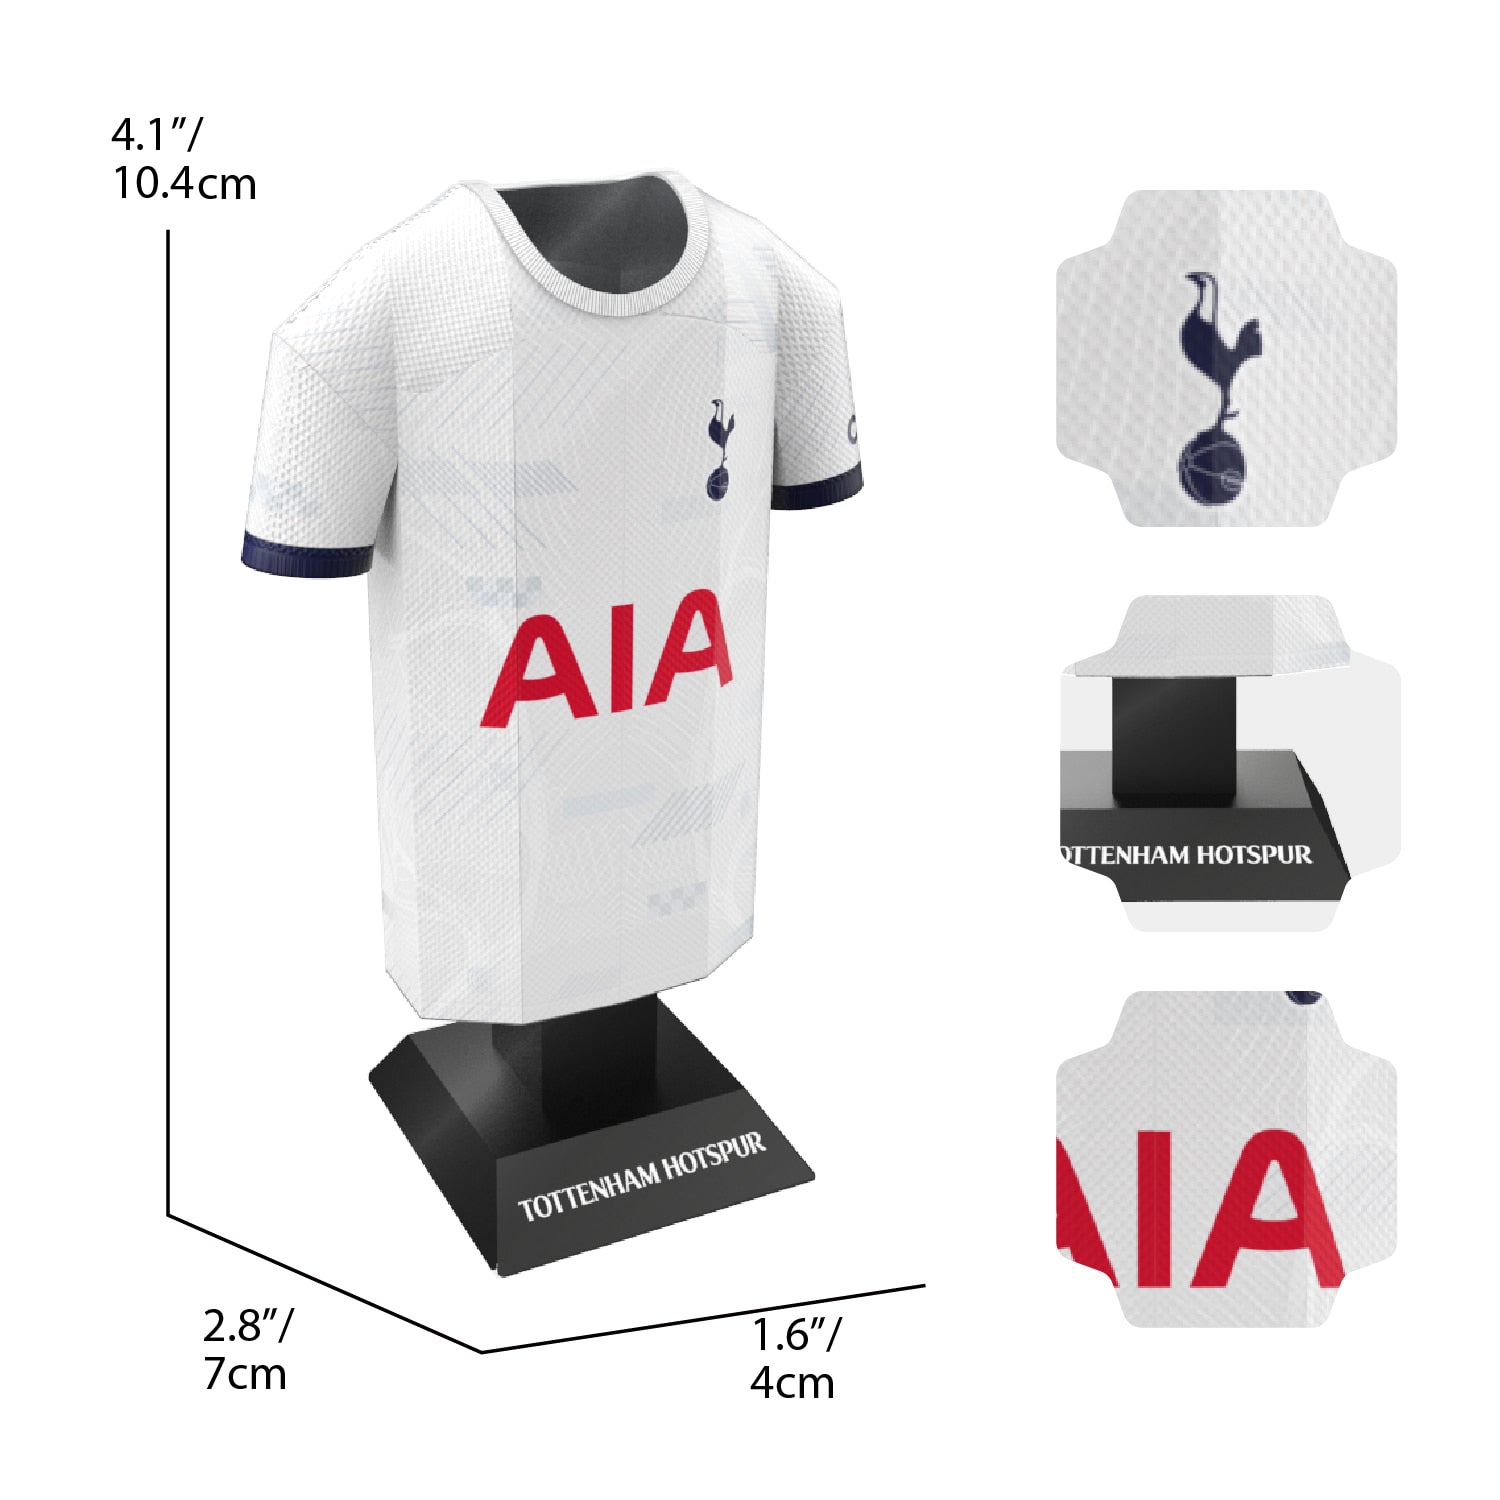 Tottenham home shirt dimensions